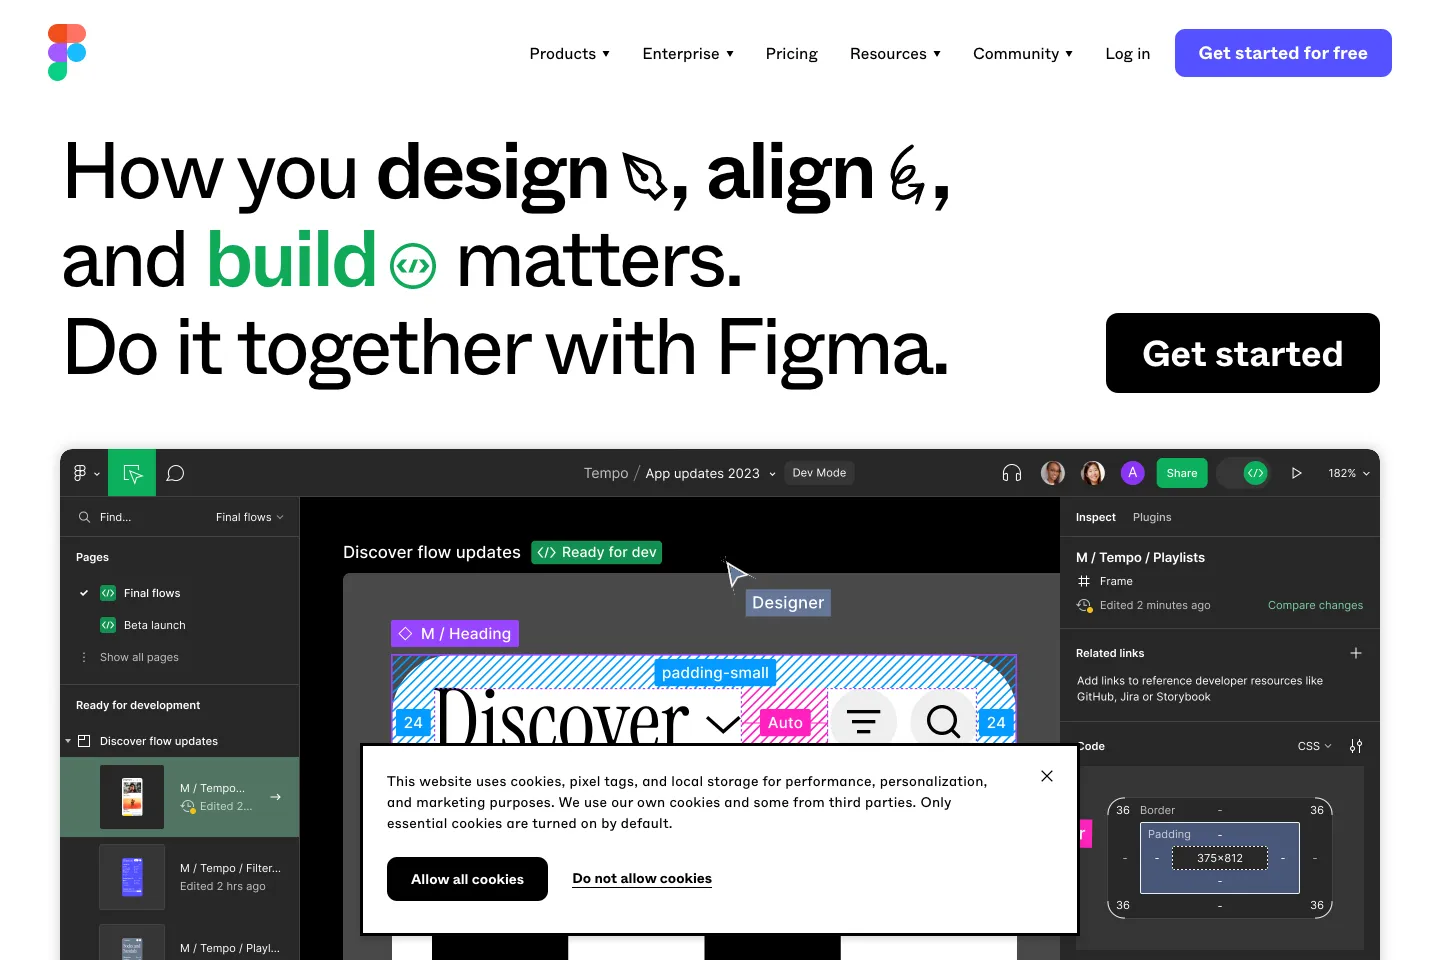 Figma is a cloud-based design tool